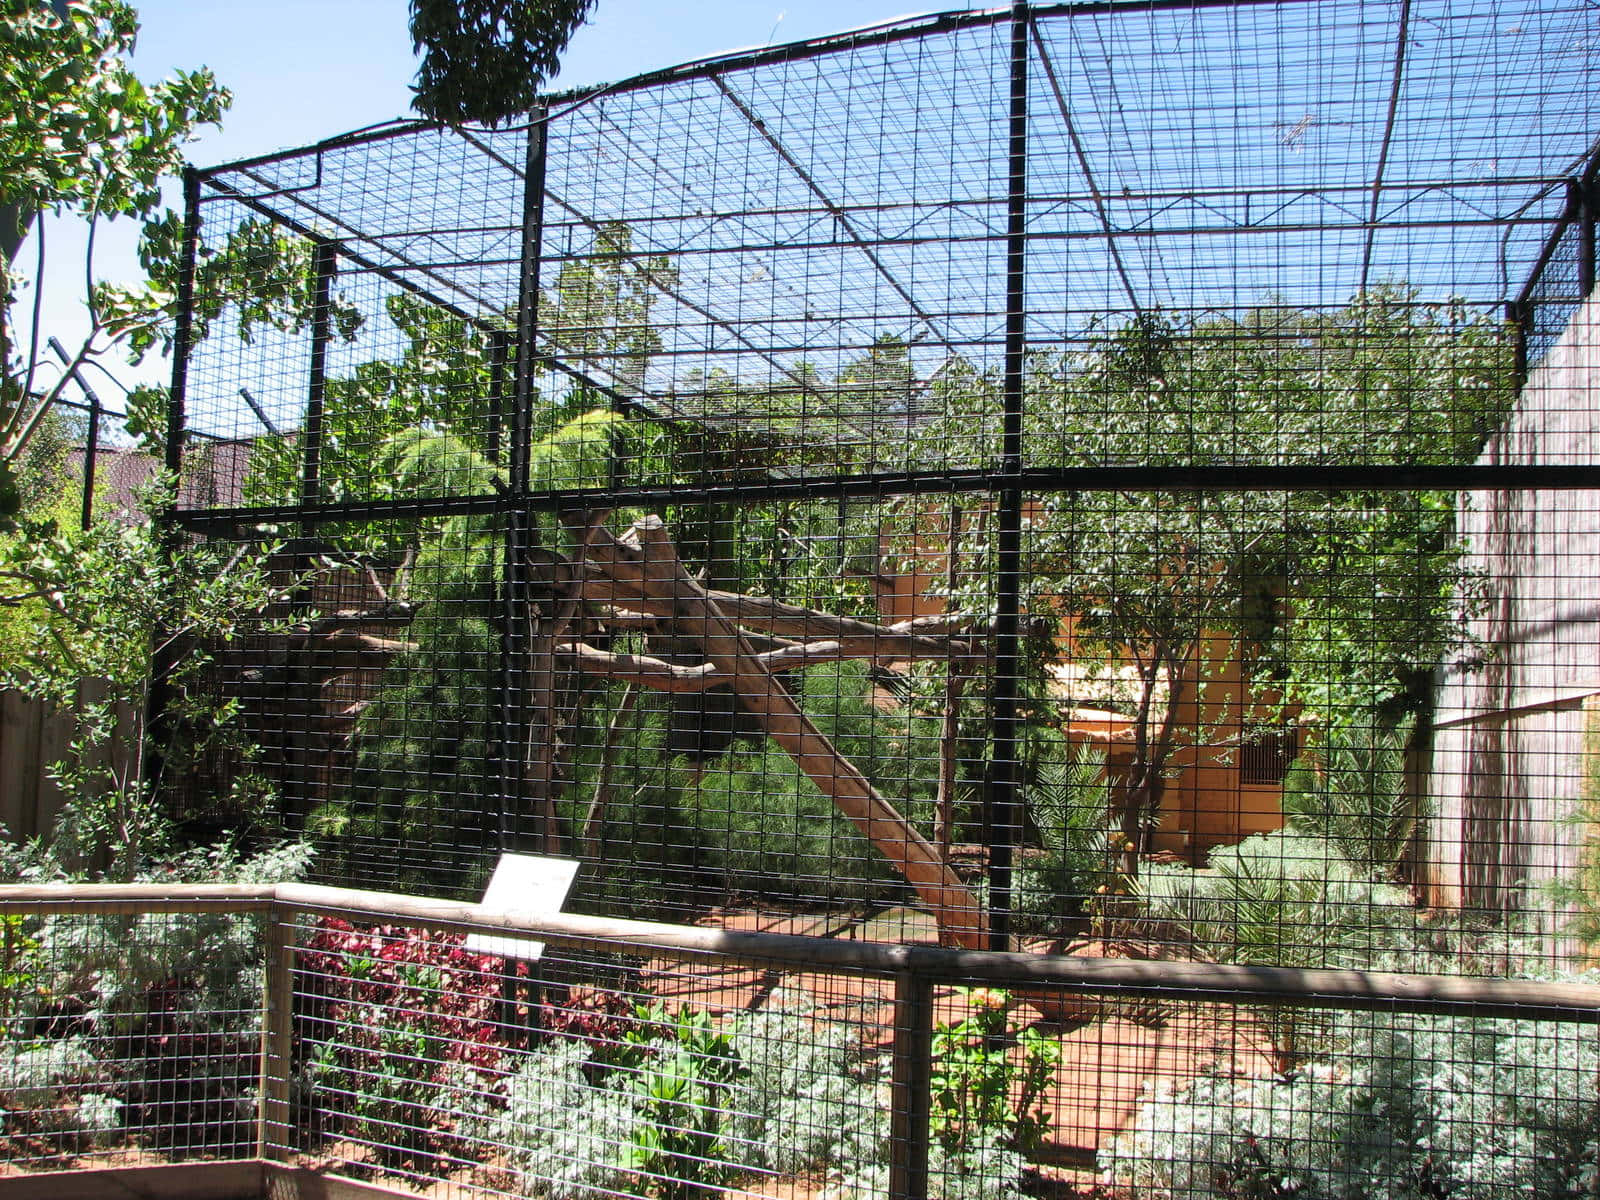 Adelaide Zoo_ Aviary Enclosure.jpg Wallpaper